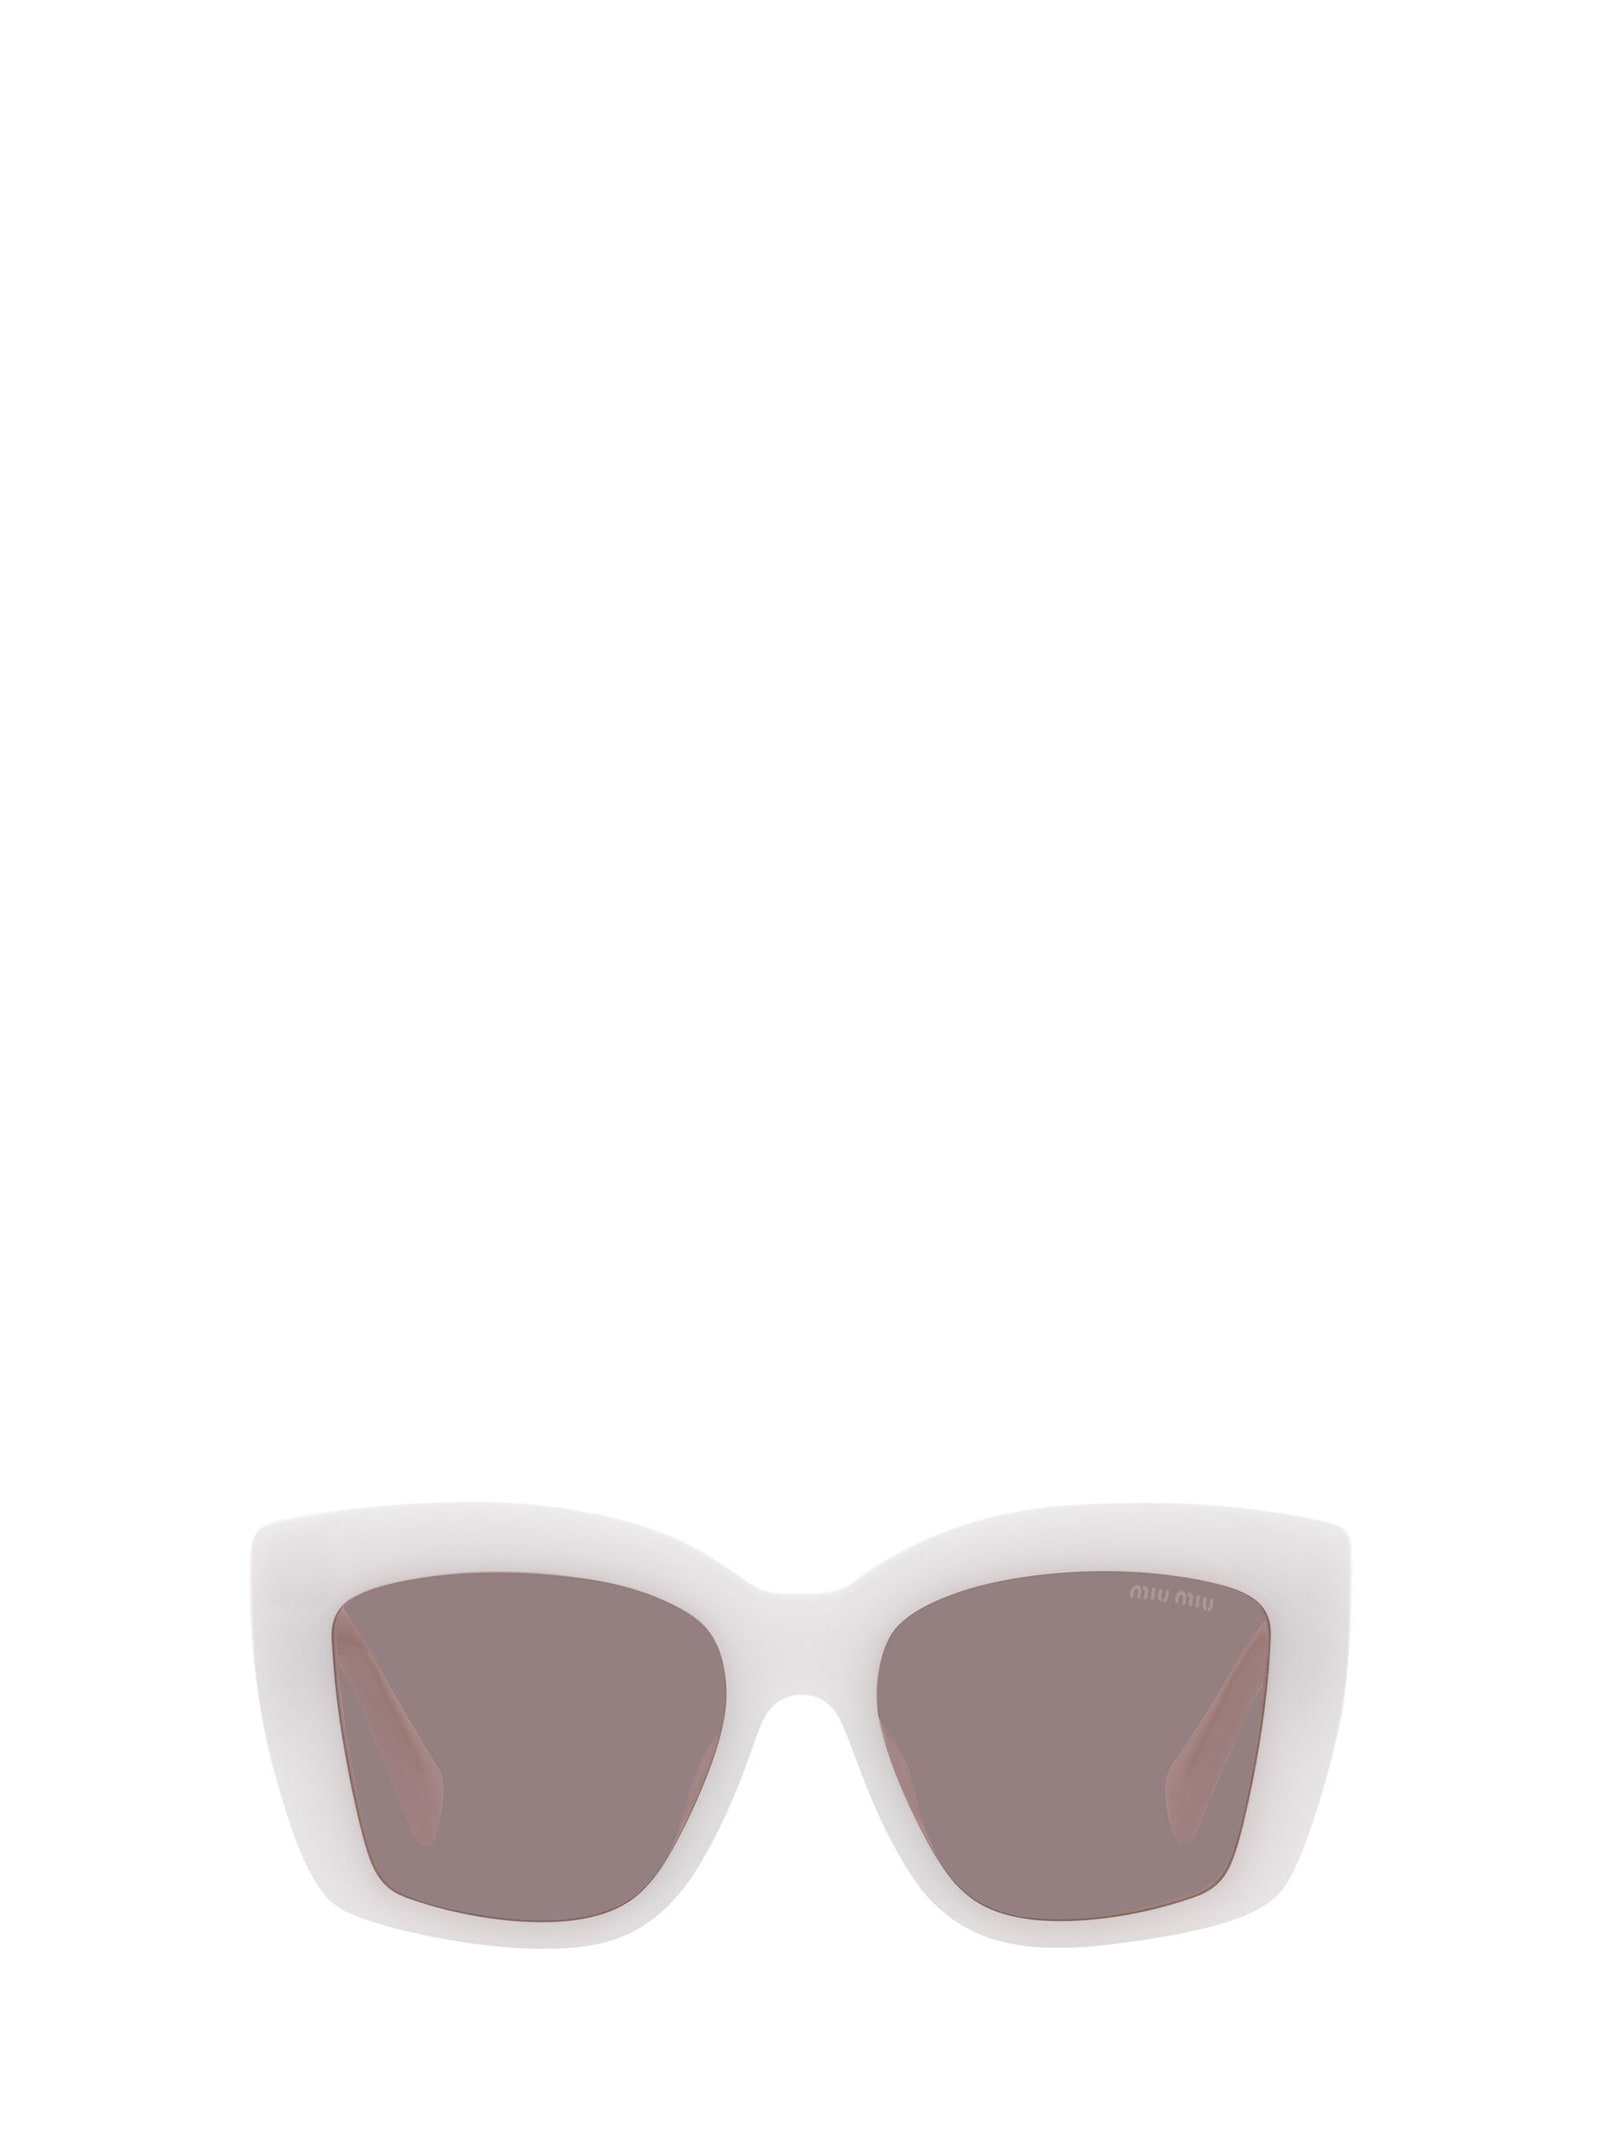 Miu Miu Eyewear Miu Miu Mu 04ws White Opal Sunglasses